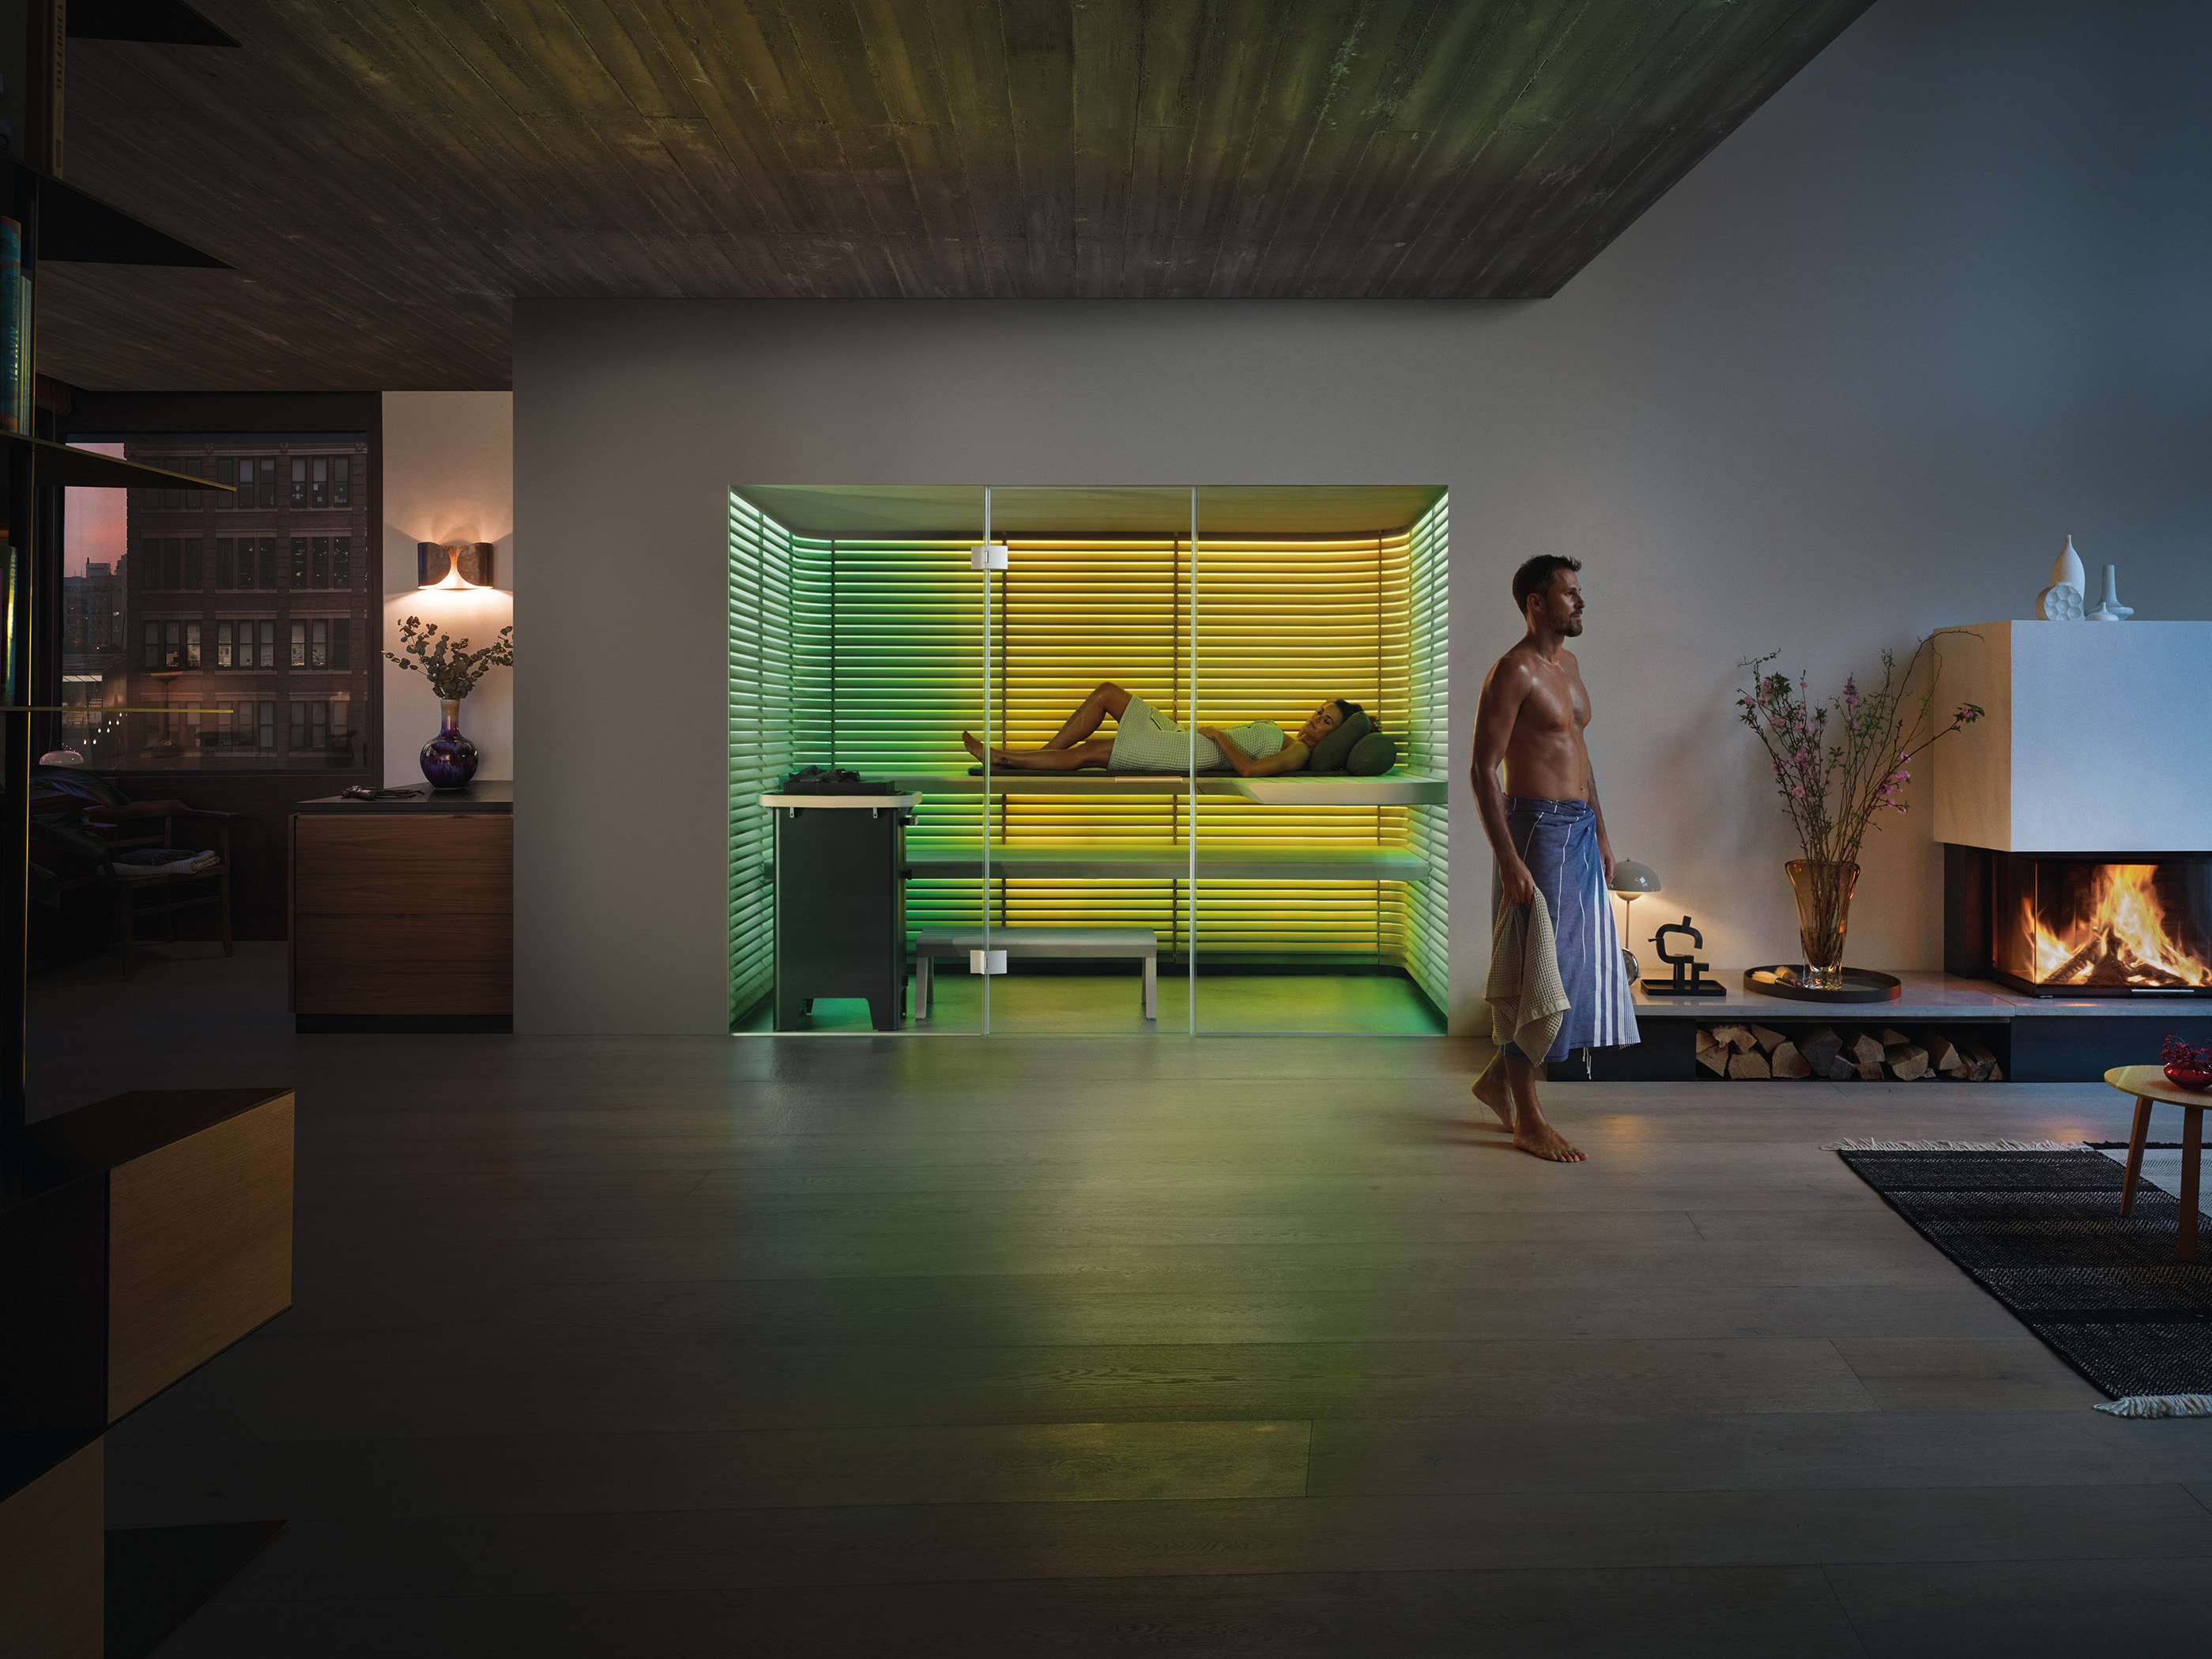 S11 sauna. Design by Studio F. A. Porsche